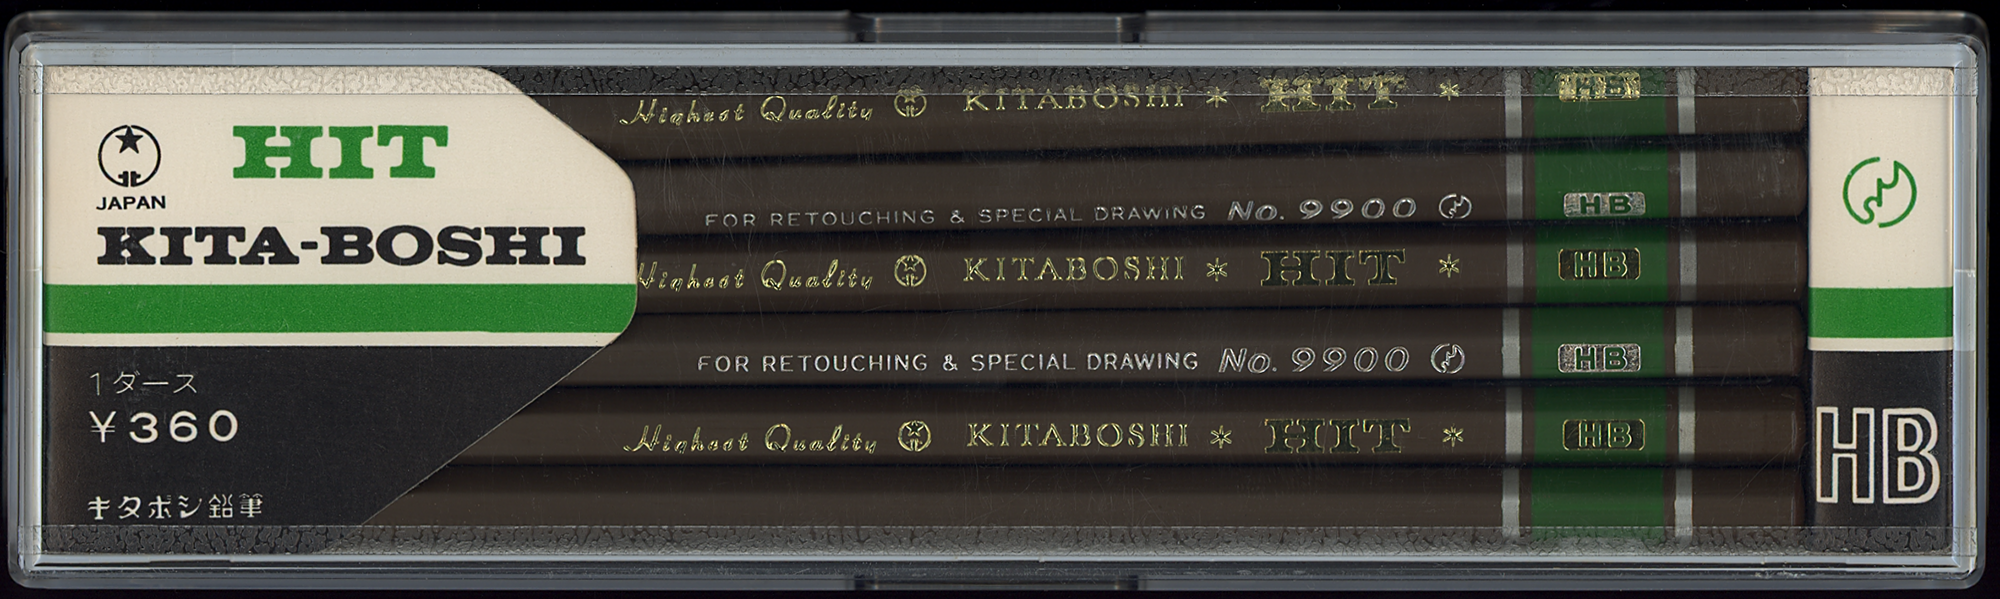 HIT No. 9900 HB by Kita-Boshi Pencil Co.